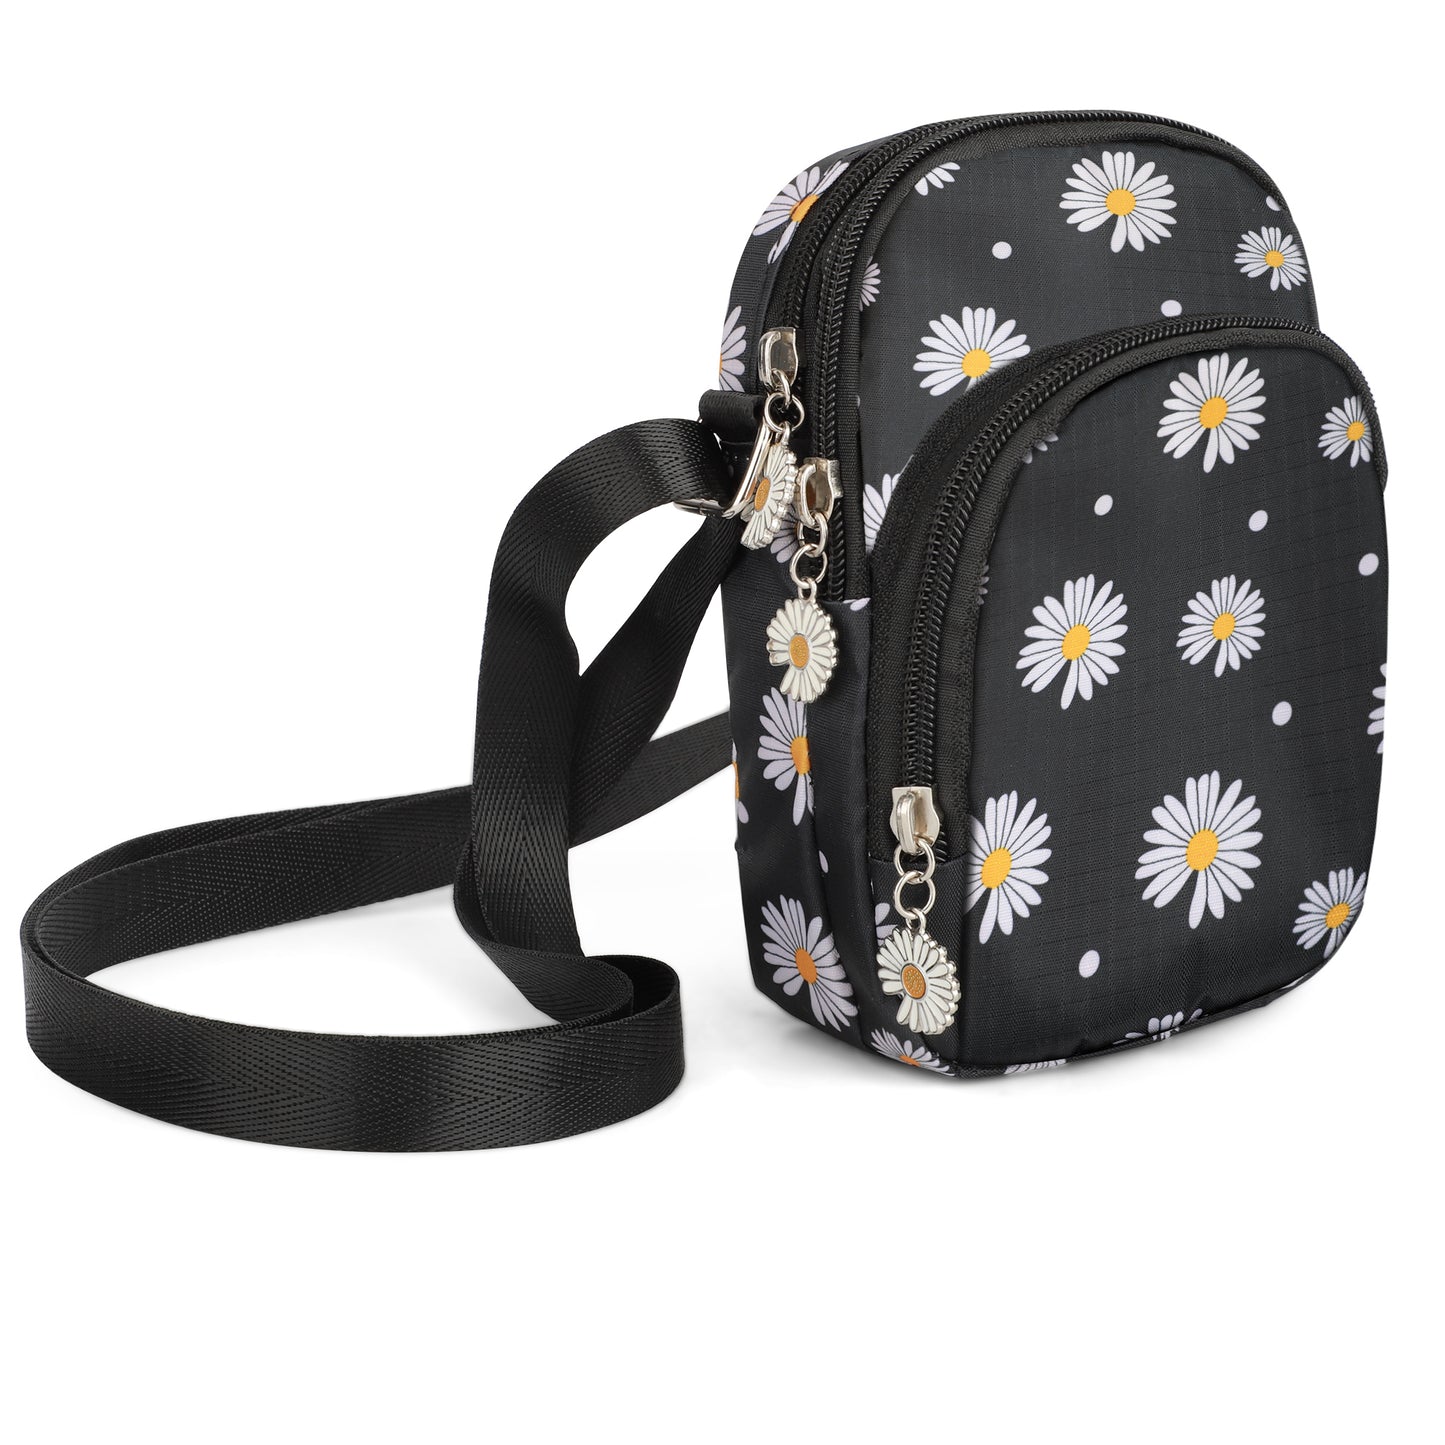 Crossbody Bag - Adjustable Strap, Versatile Use, Ideal Gift for Men, Women, and Teens